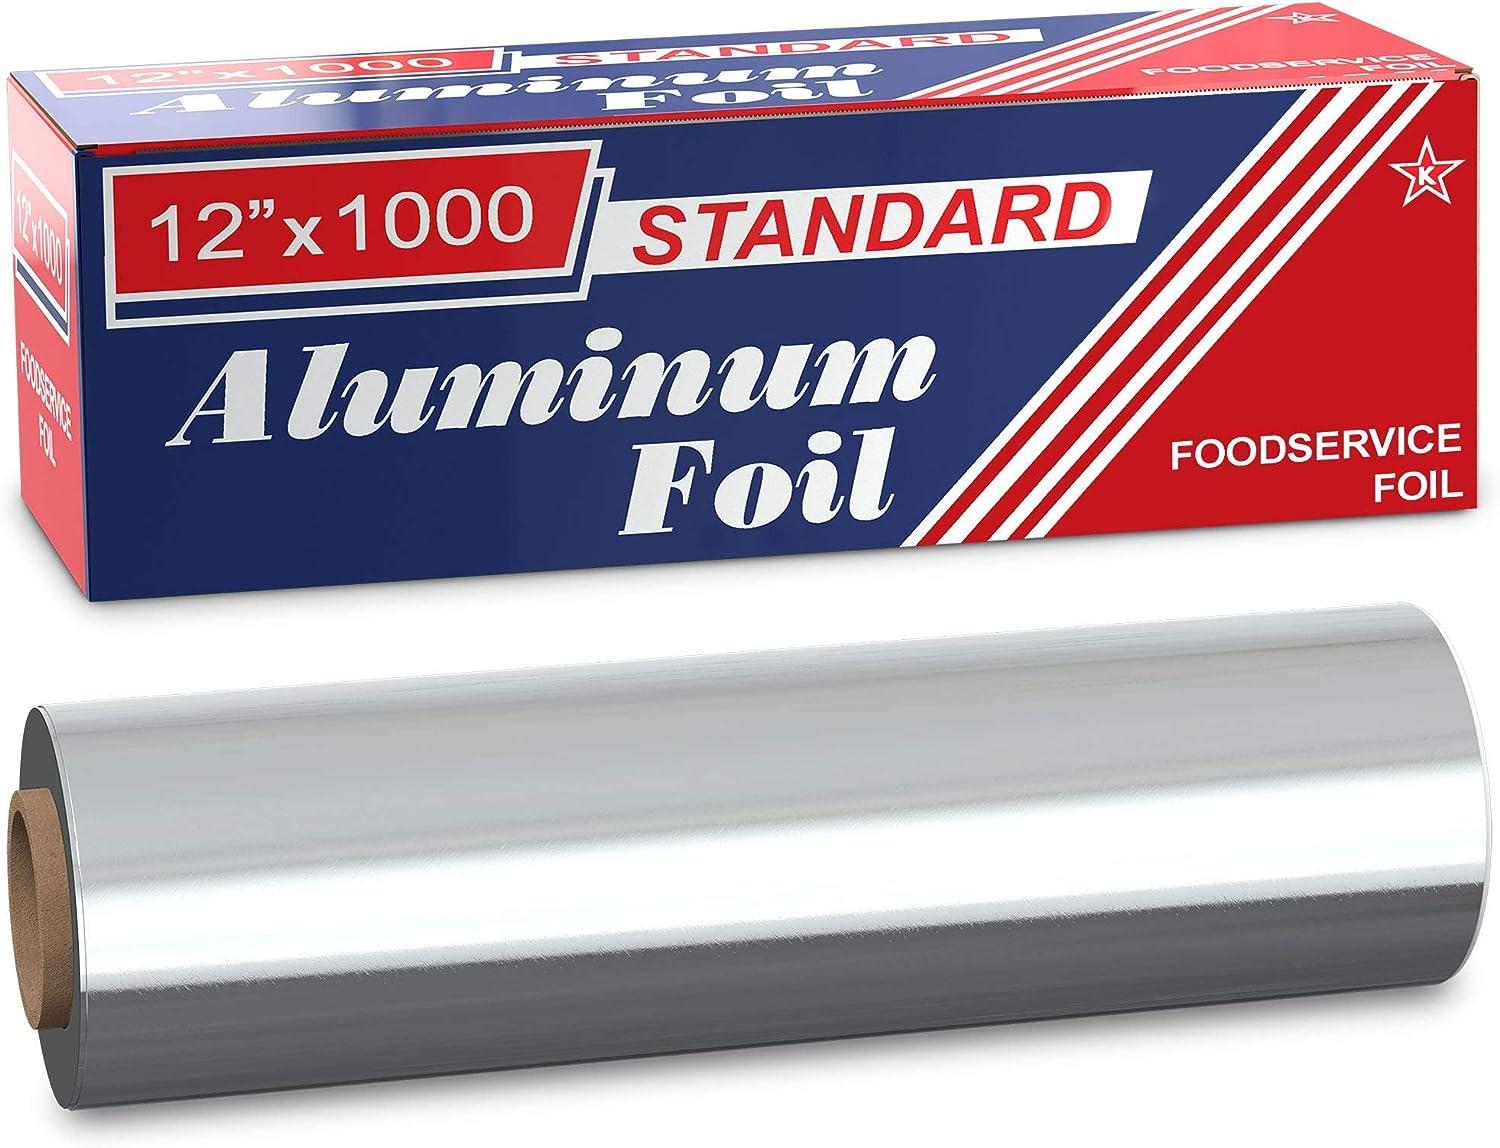  Ox Plastics Aluminum Foil Wrap for Food